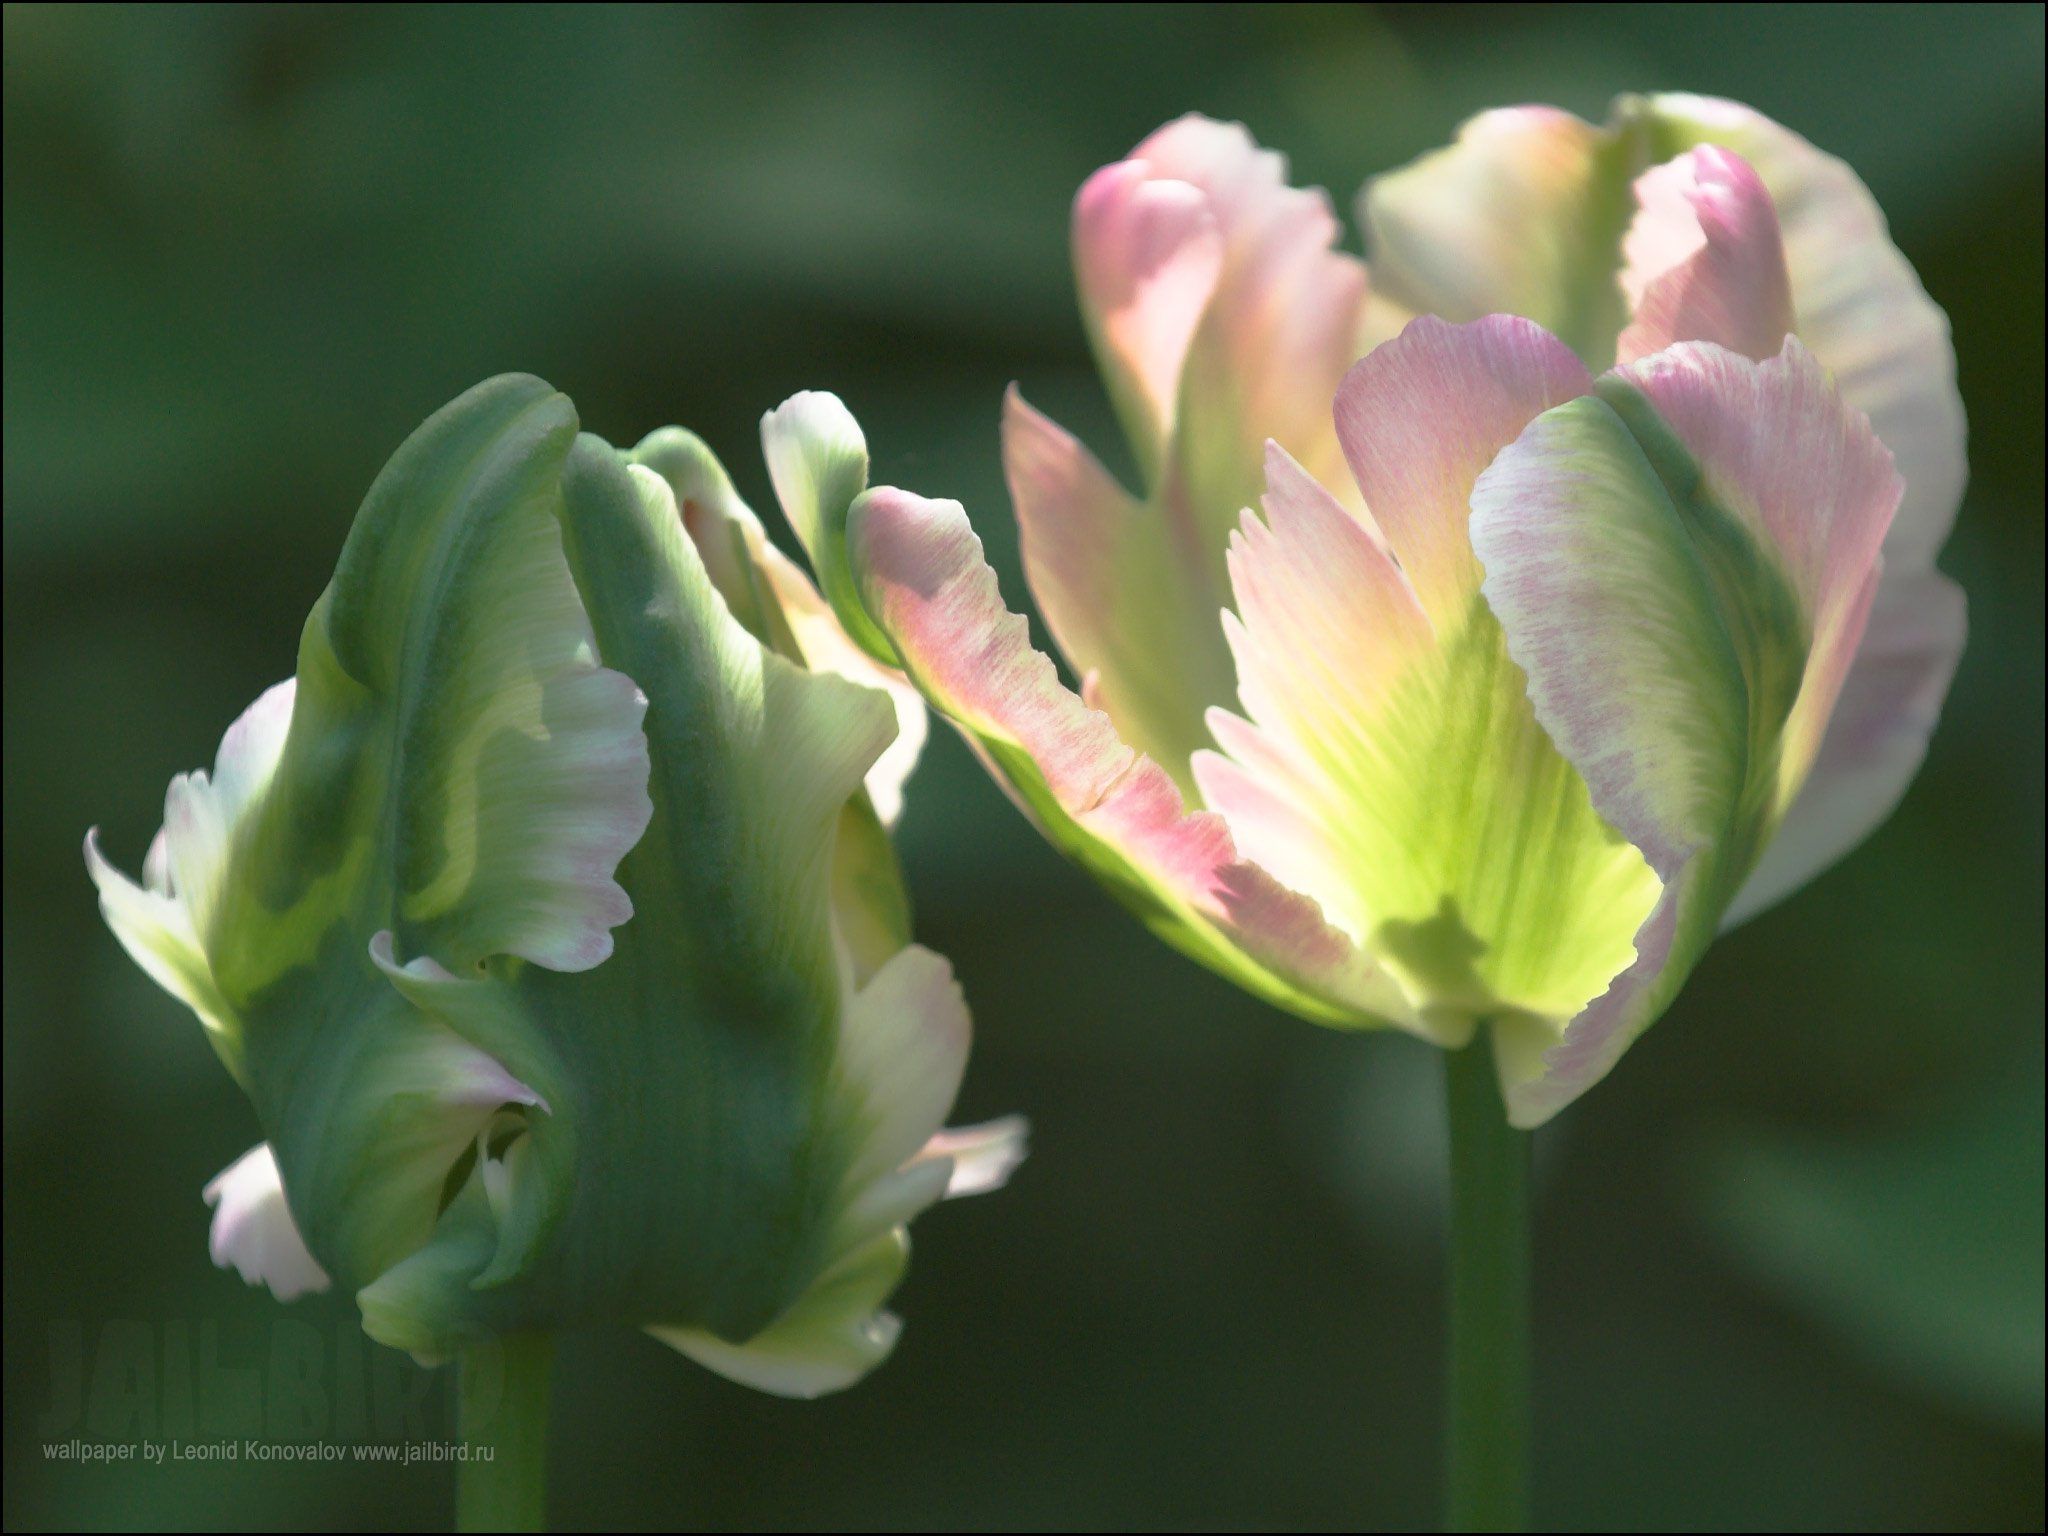 тюльпаны валерий гергиев фото